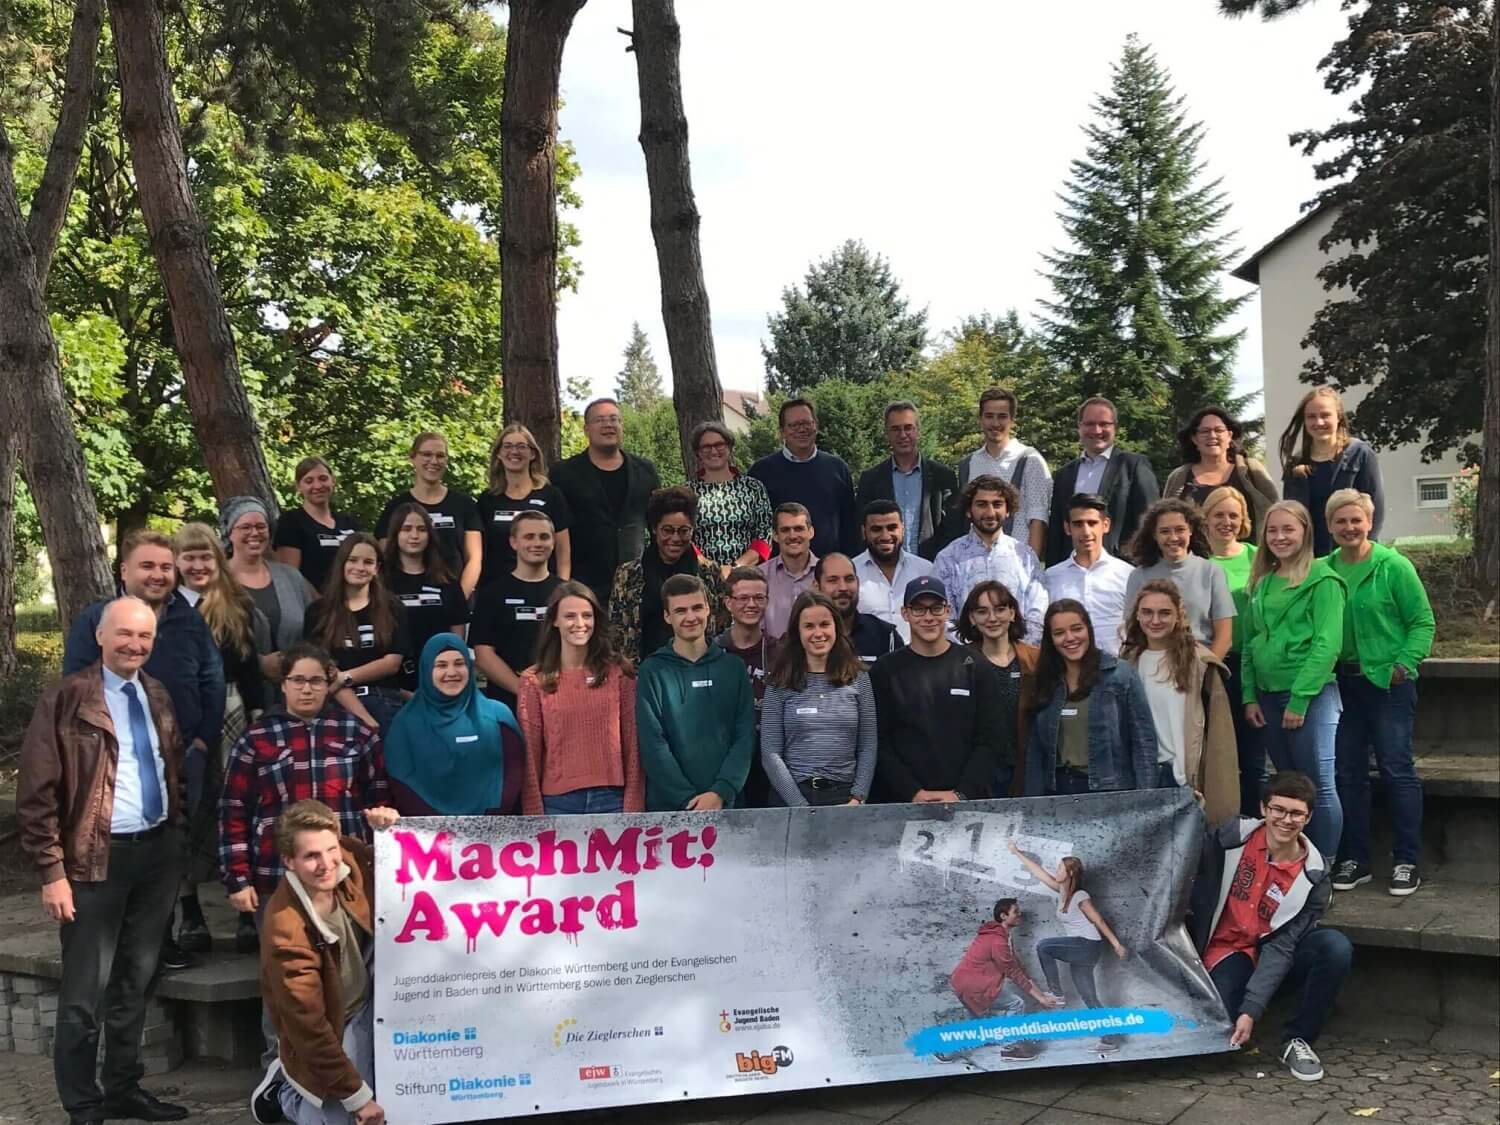 MachMit!Award 2019 / Jugenddiakoniepreis 2019